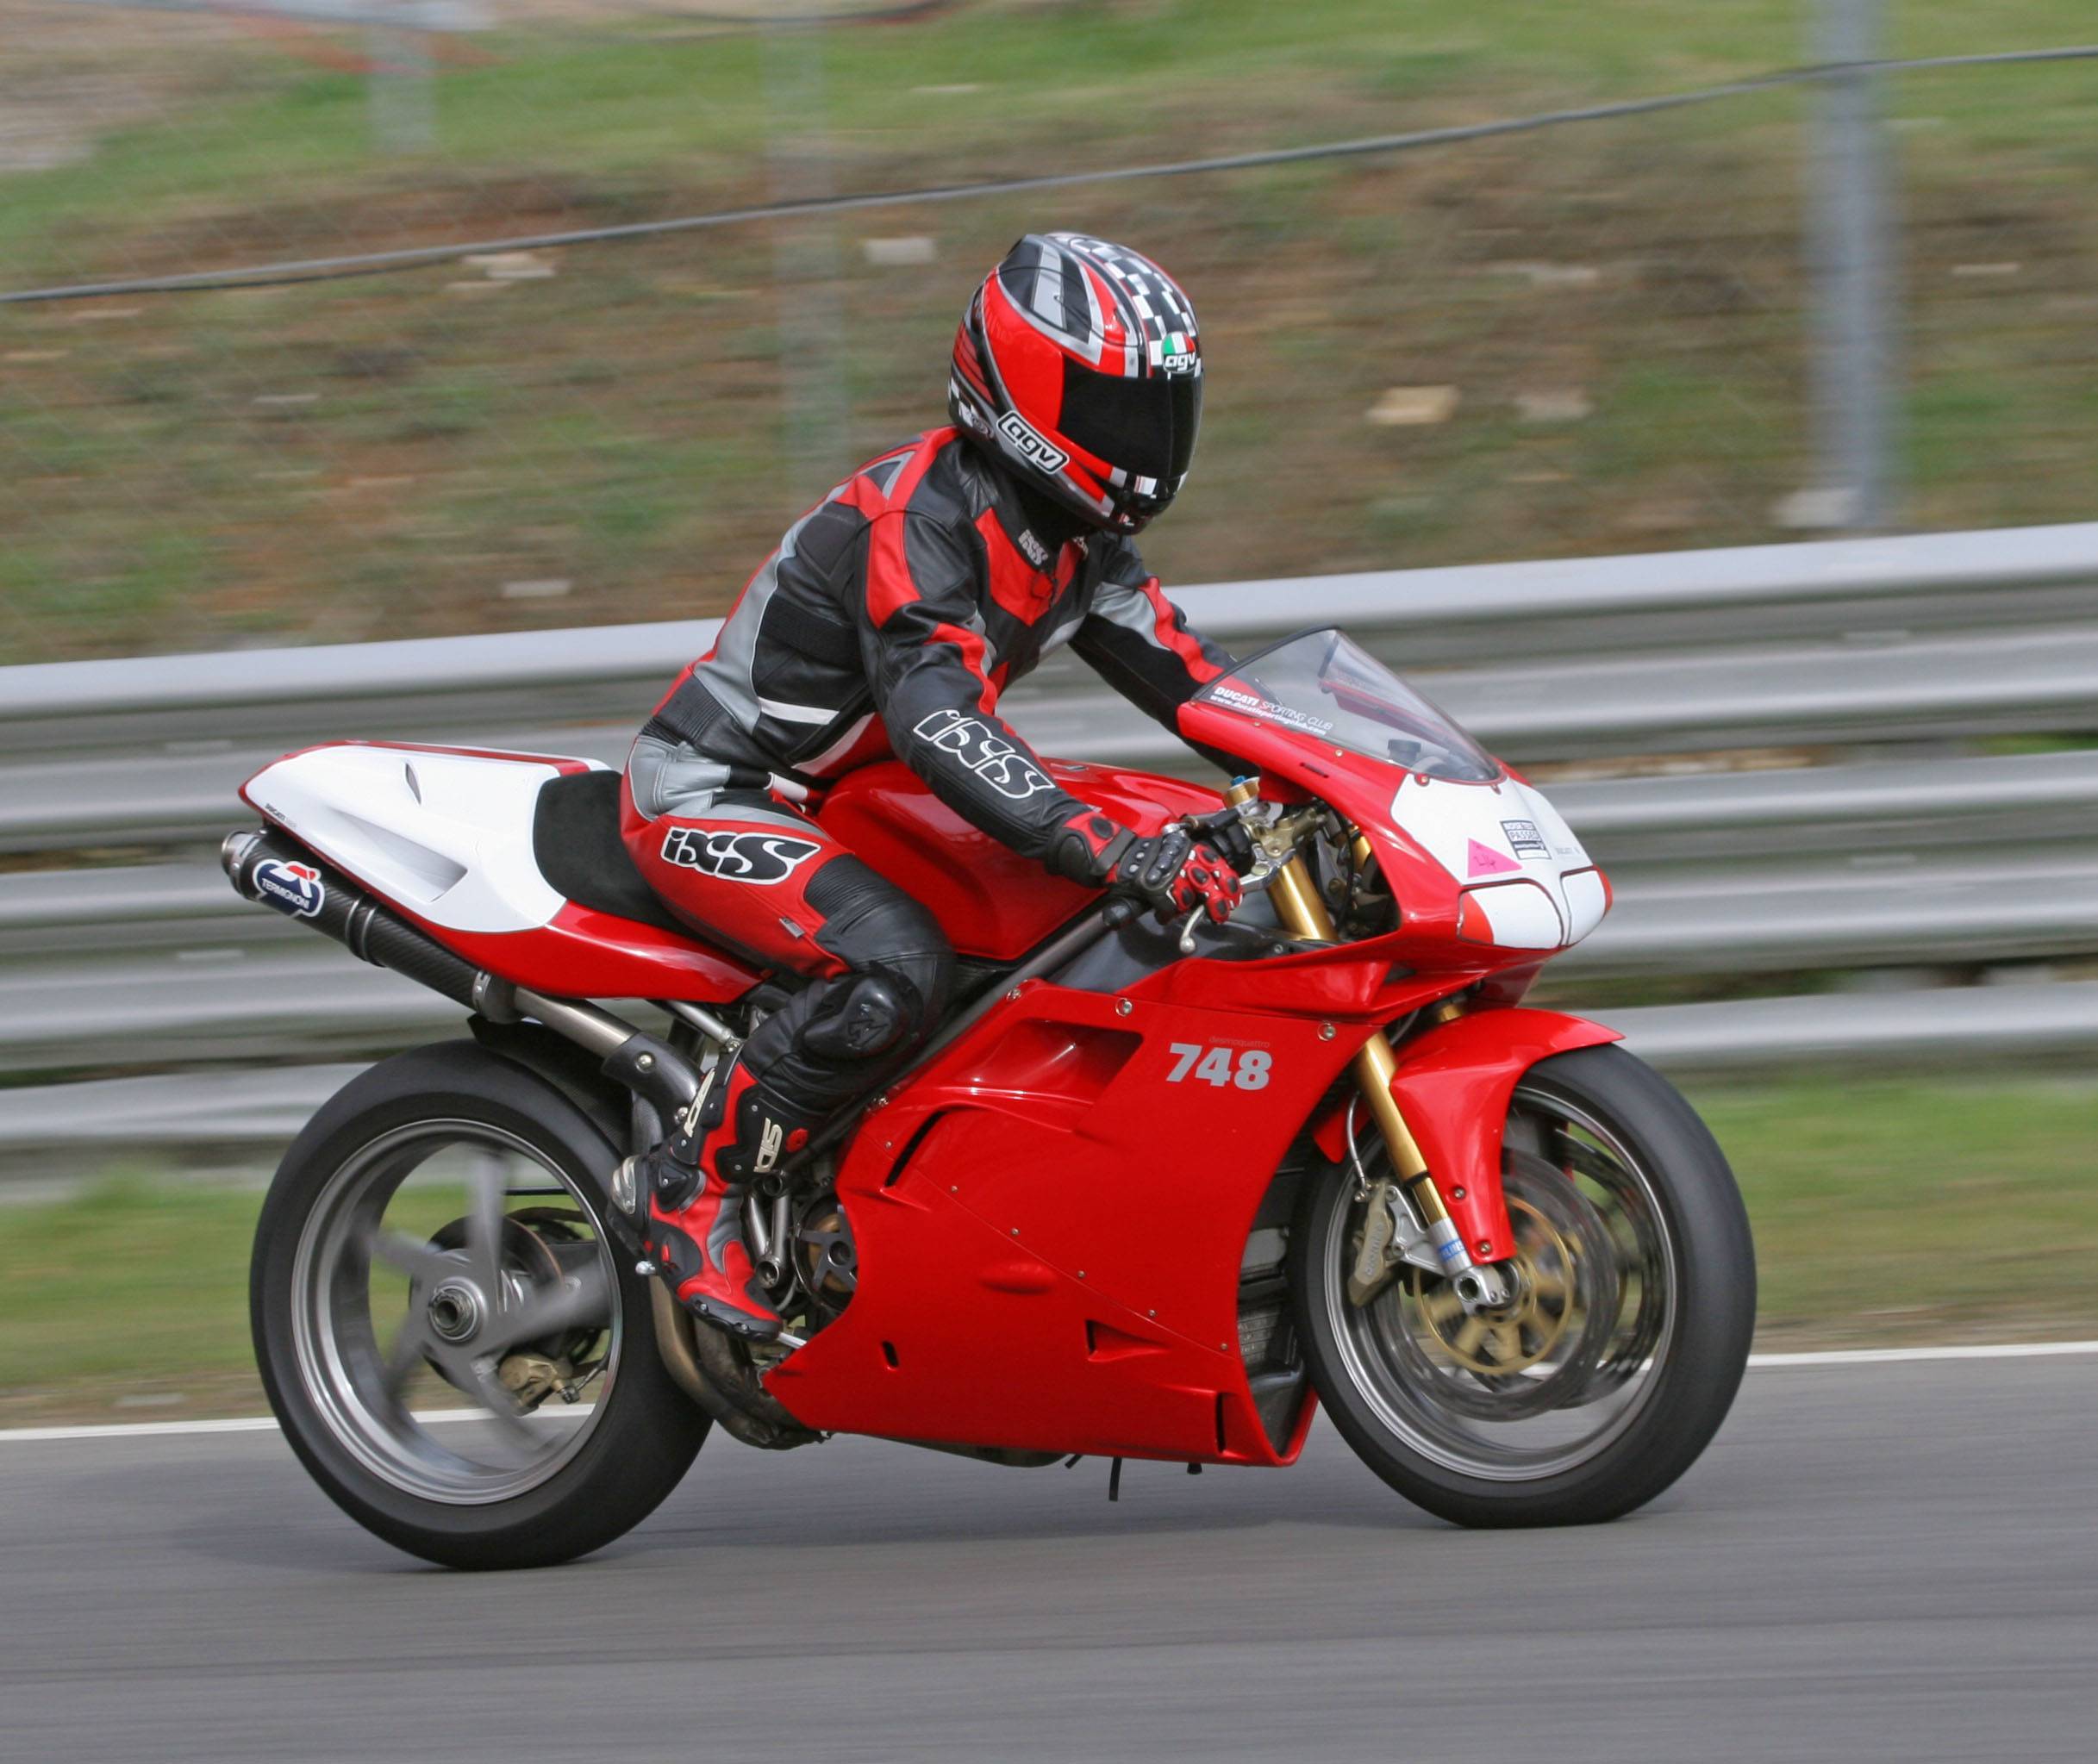 Мотоцикл ducati 748 r 2002 – изучаем по порядку